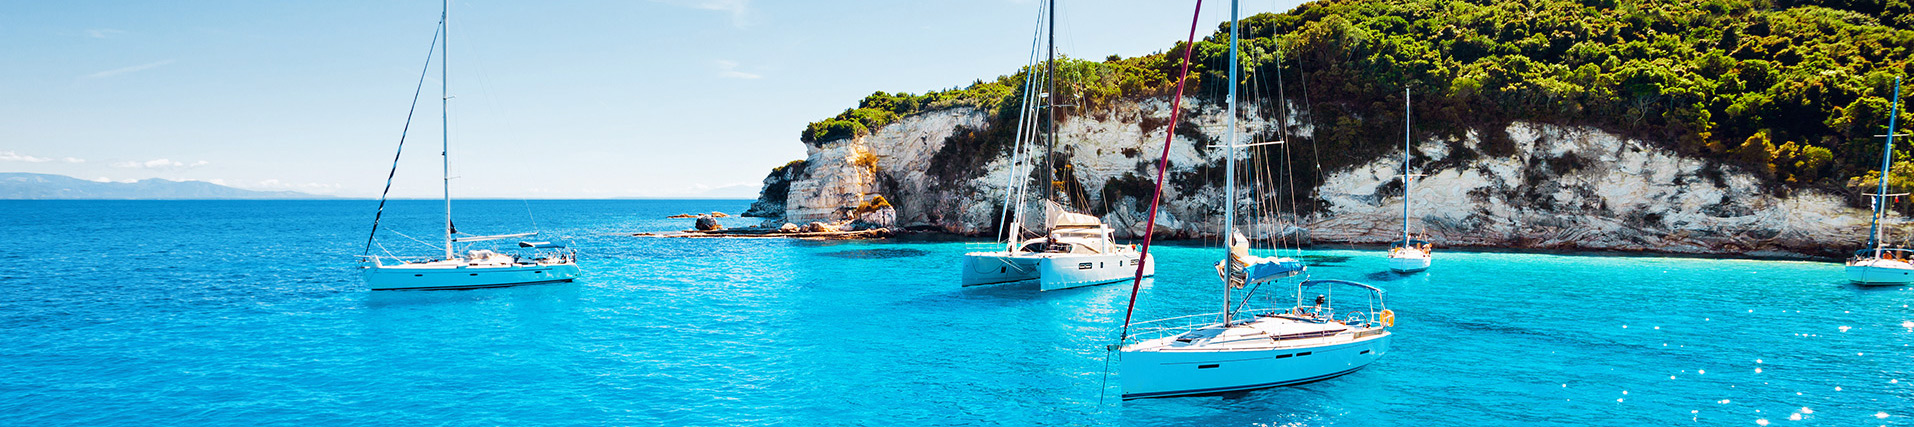 Sailboats charter in Croatia